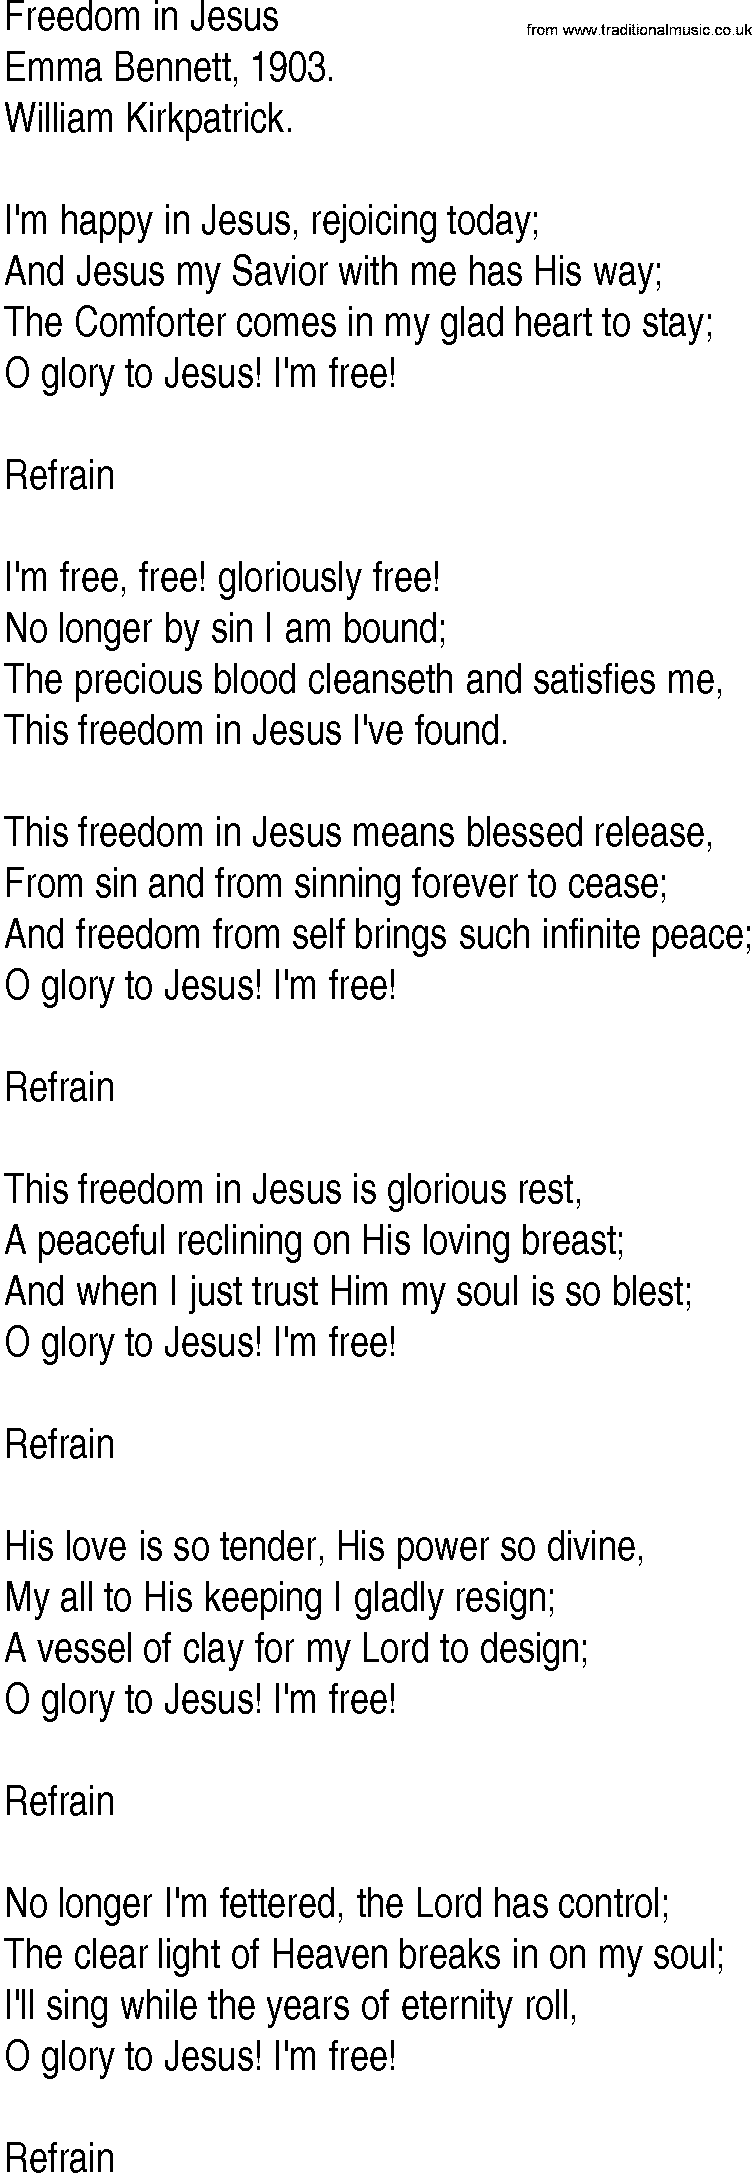 Hymn and Gospel Song: Freedom in Jesus by Emma Bennett lyrics